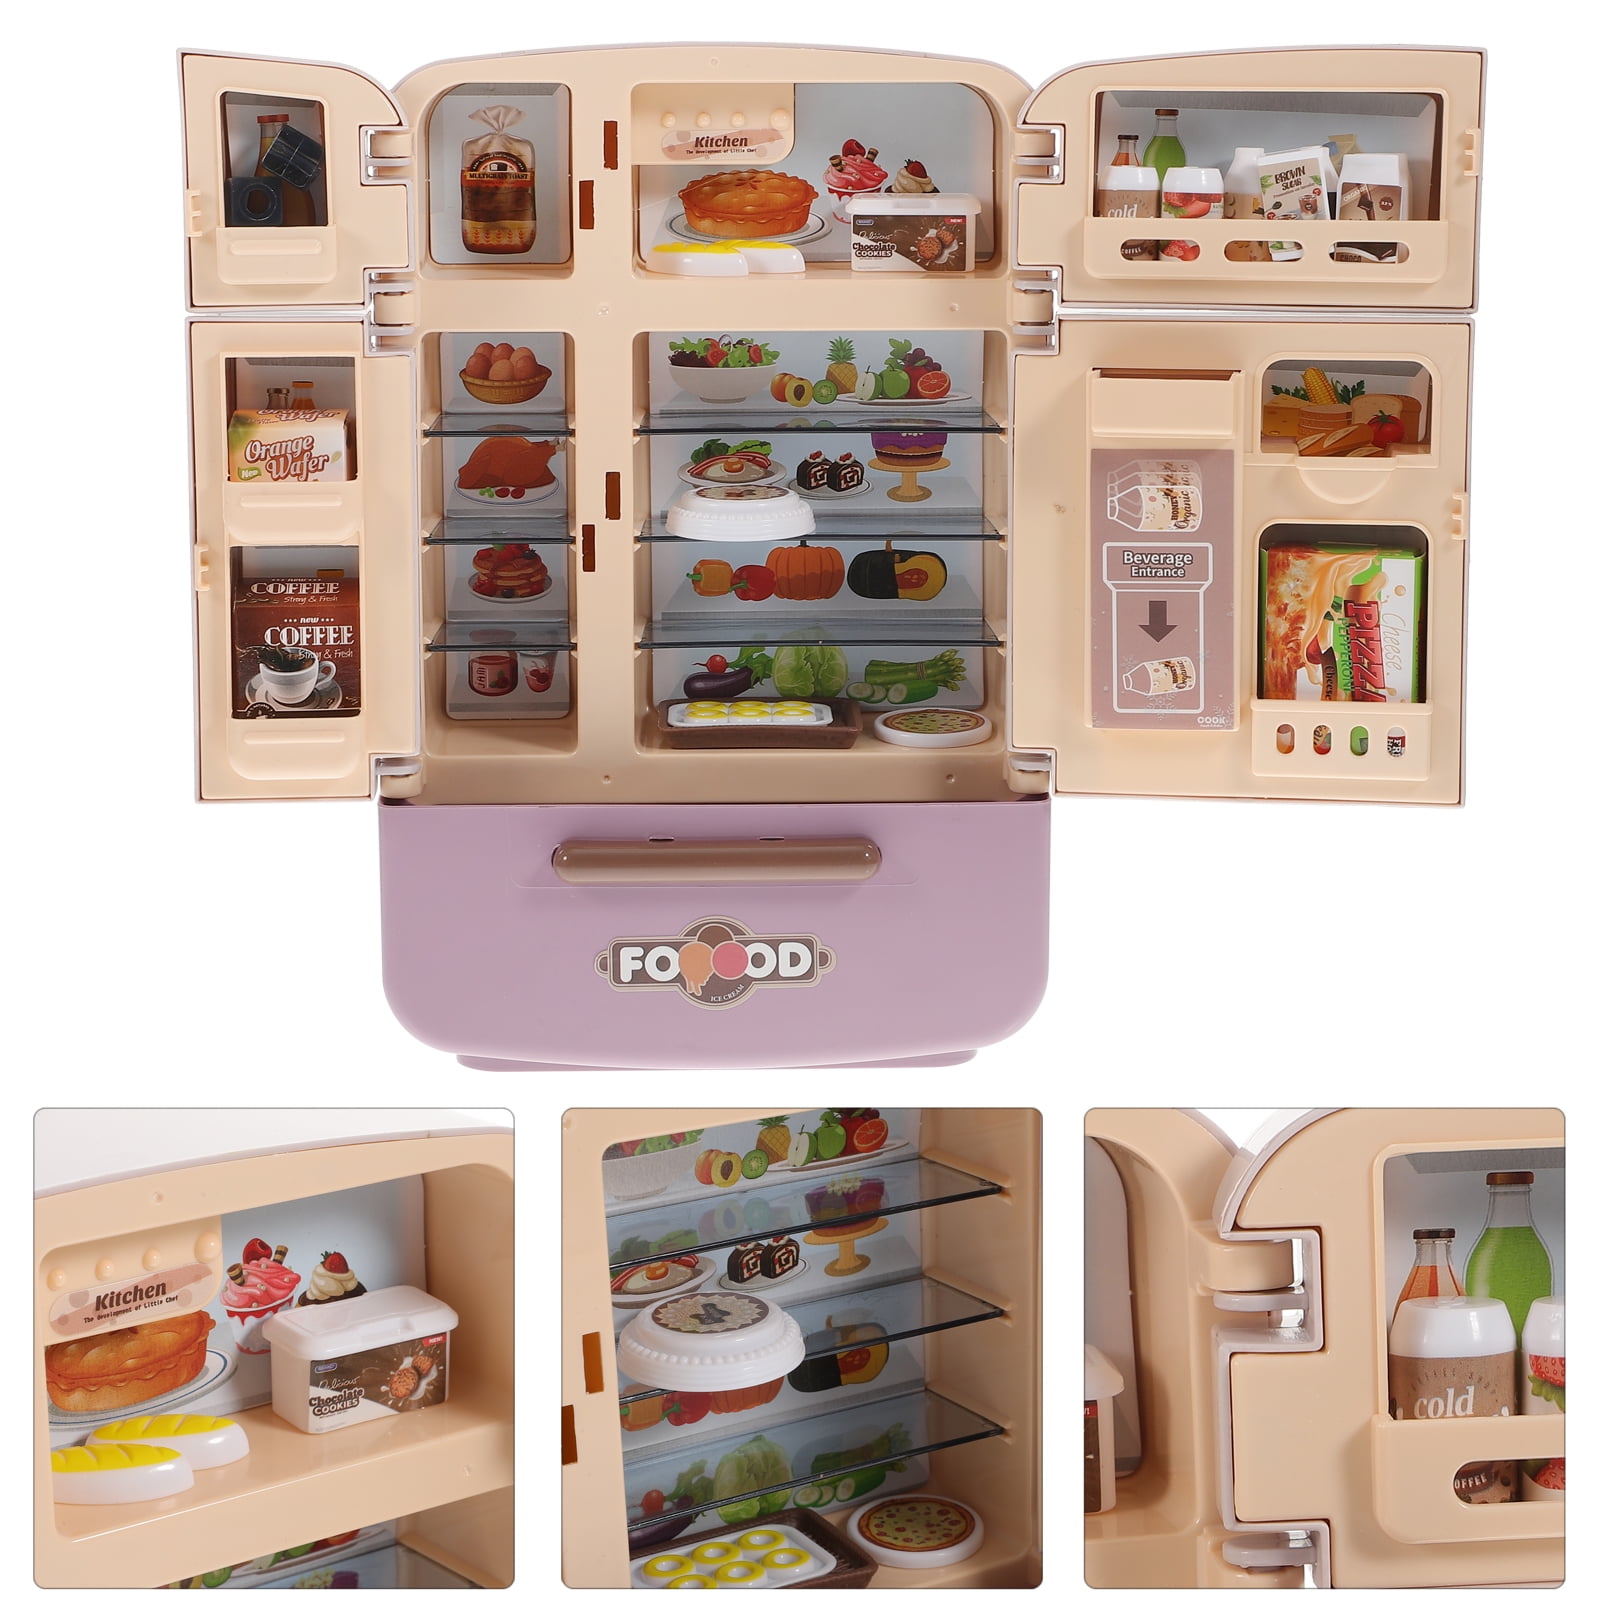 Mini Refrigerator & Food Toy Set 16-Pieces